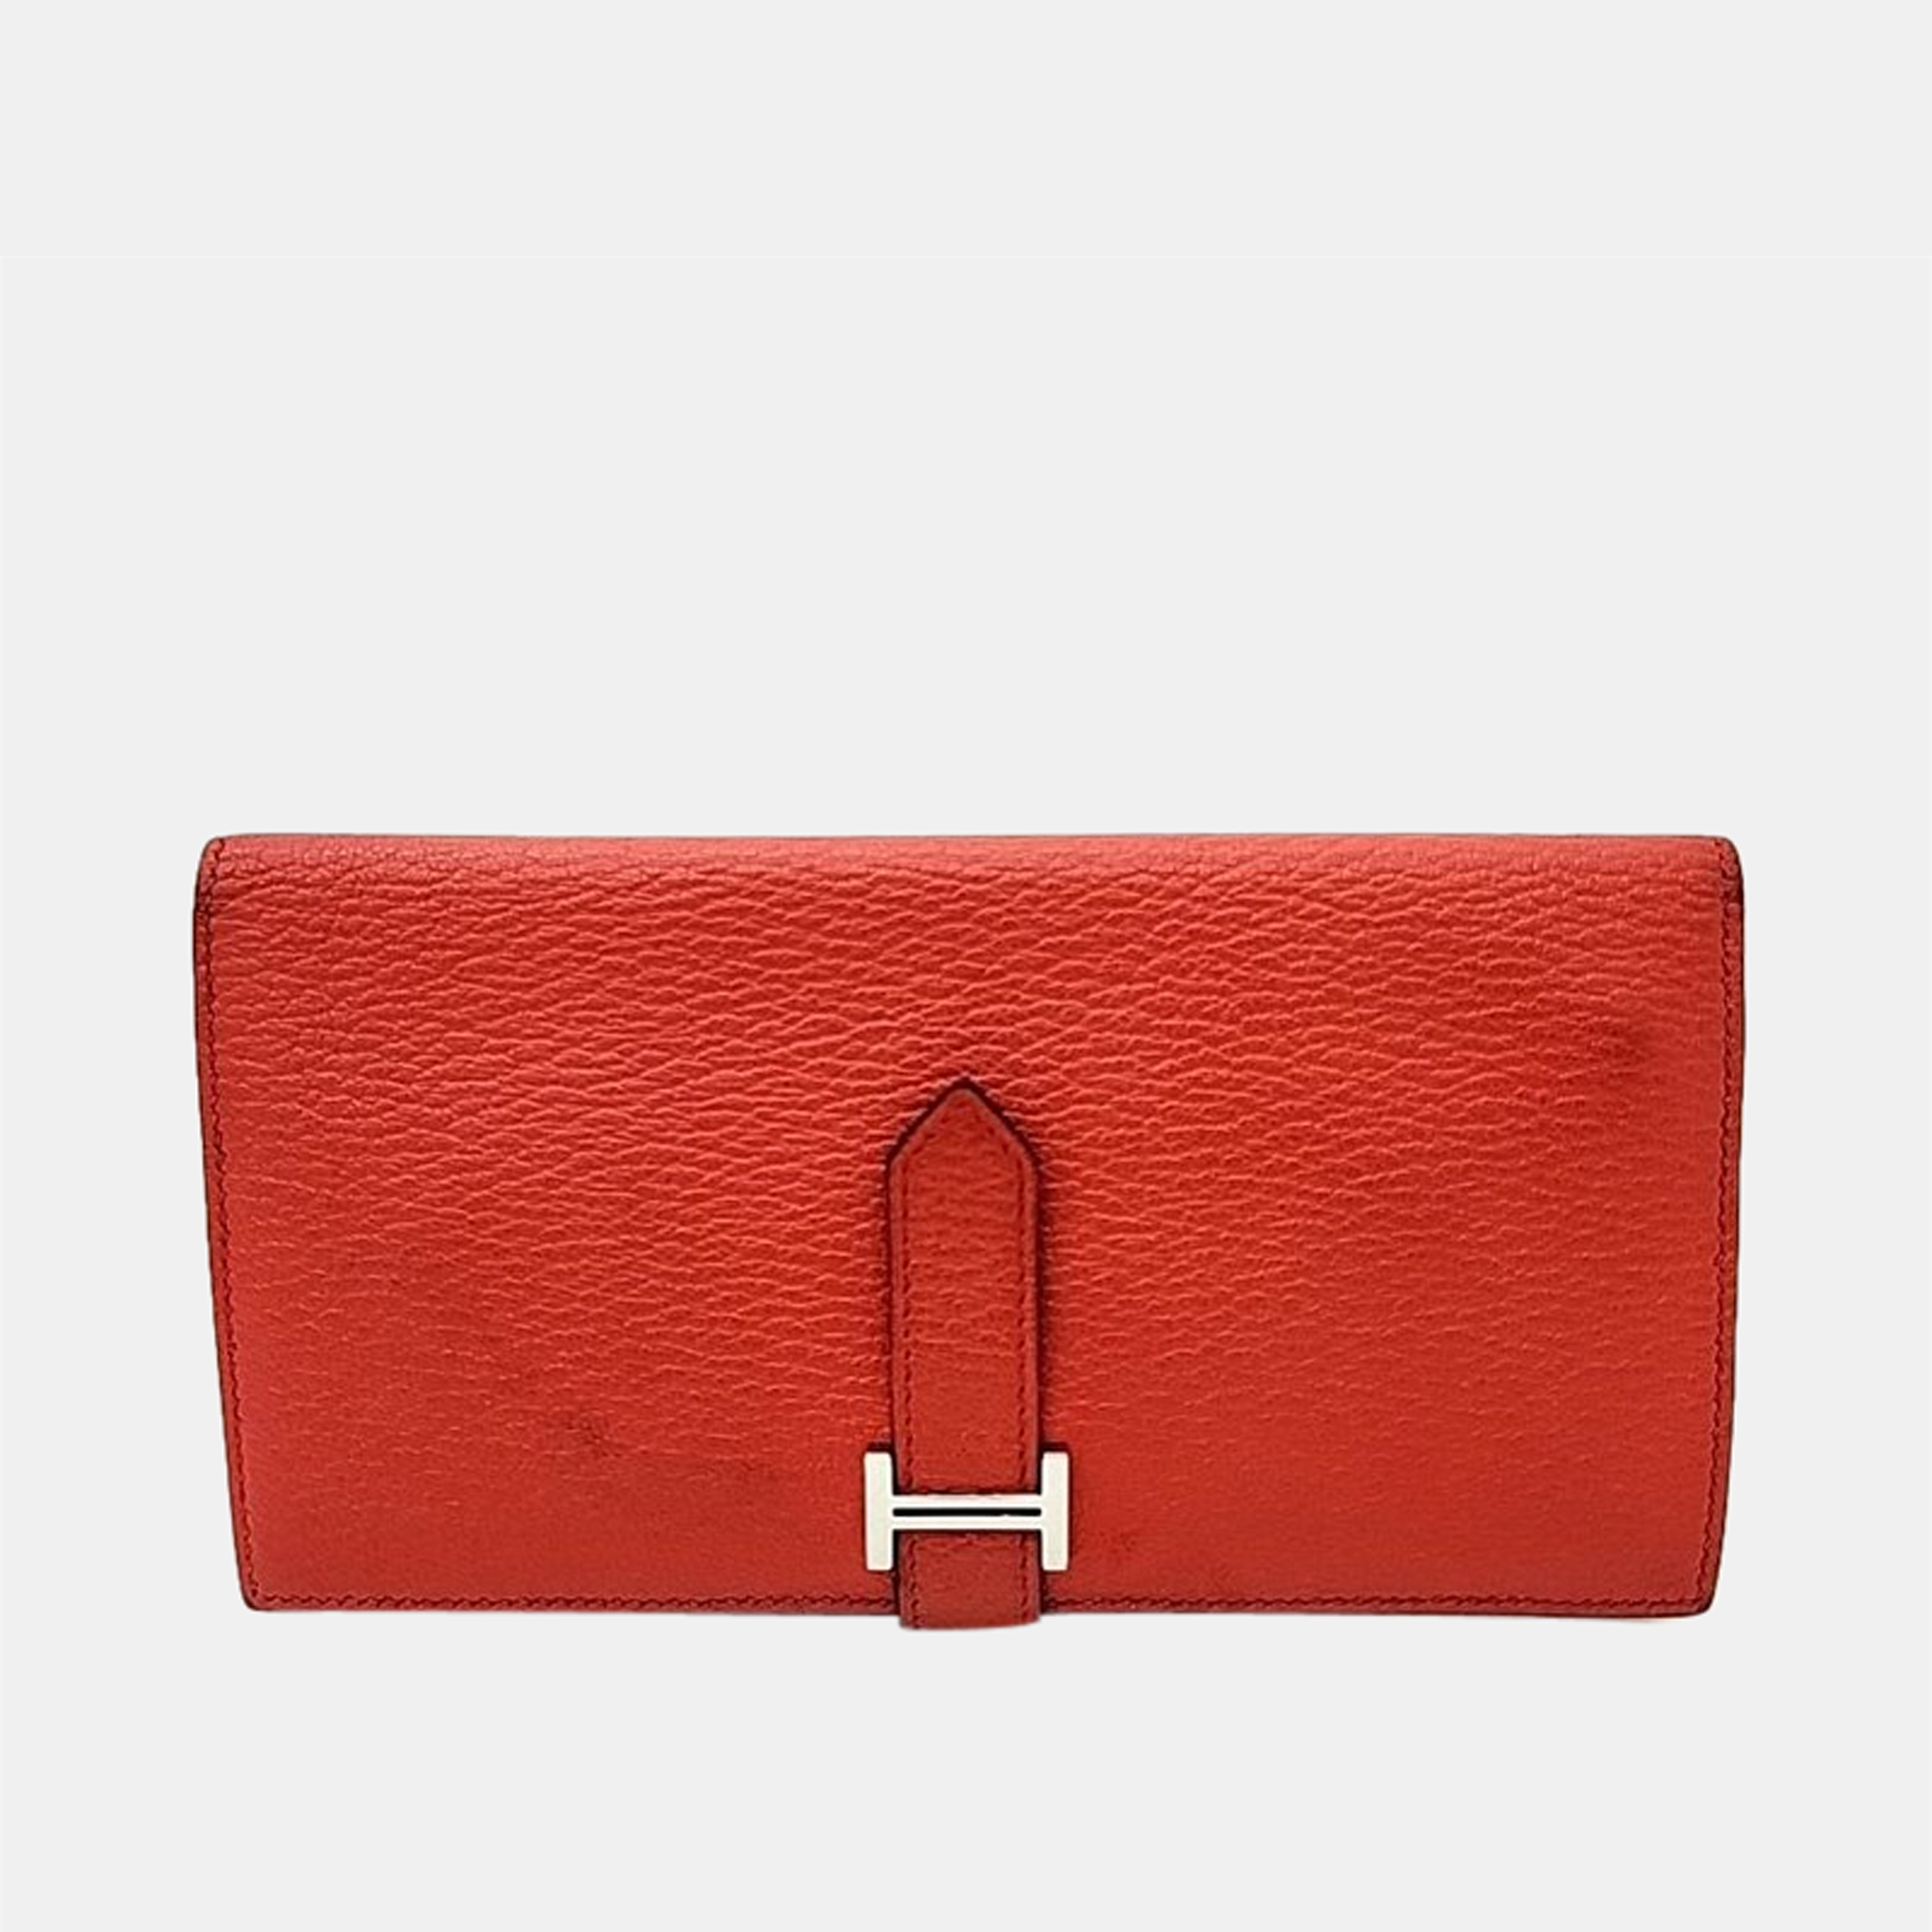 Hermes red/orange leather bearn wallet